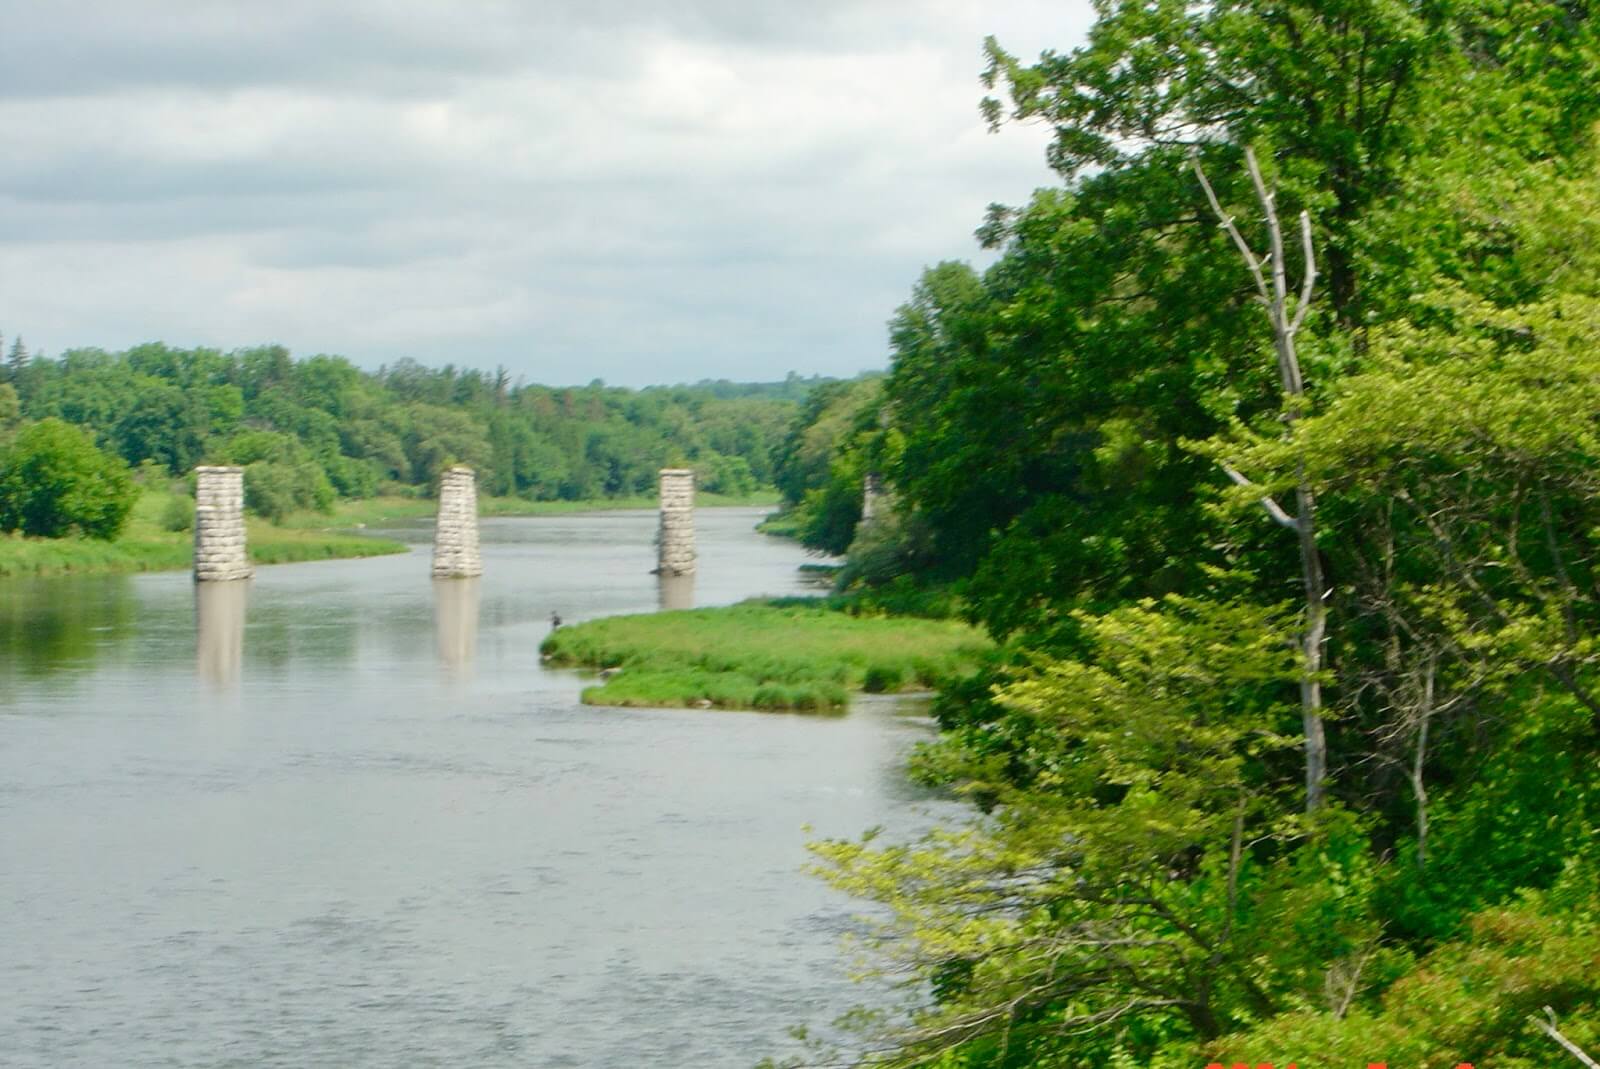 A river near Paris, Ontario with the pillars left from a broken bridge